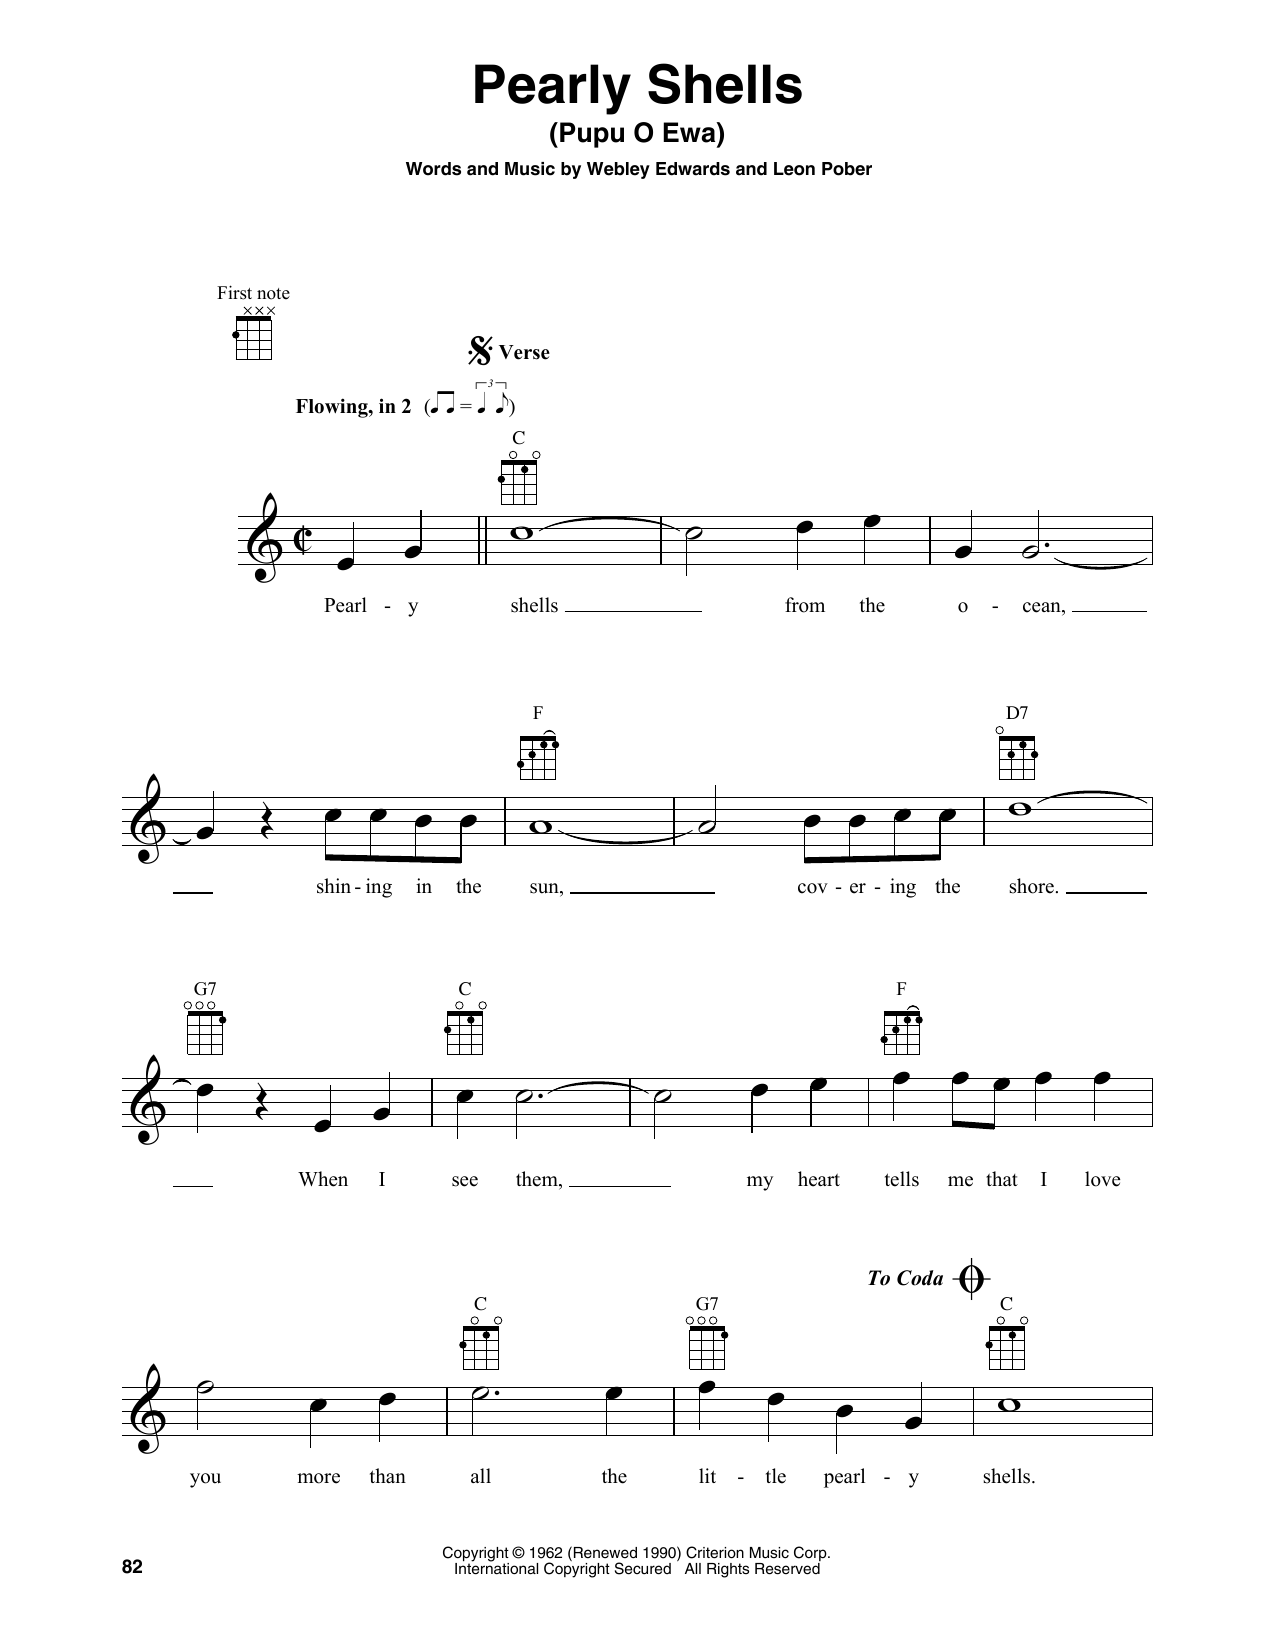 Download Leon Pober Pearly Shells (Pupu O Ewa) Sheet Music and learn how to play Baritone Ukulele PDF digital score in minutes